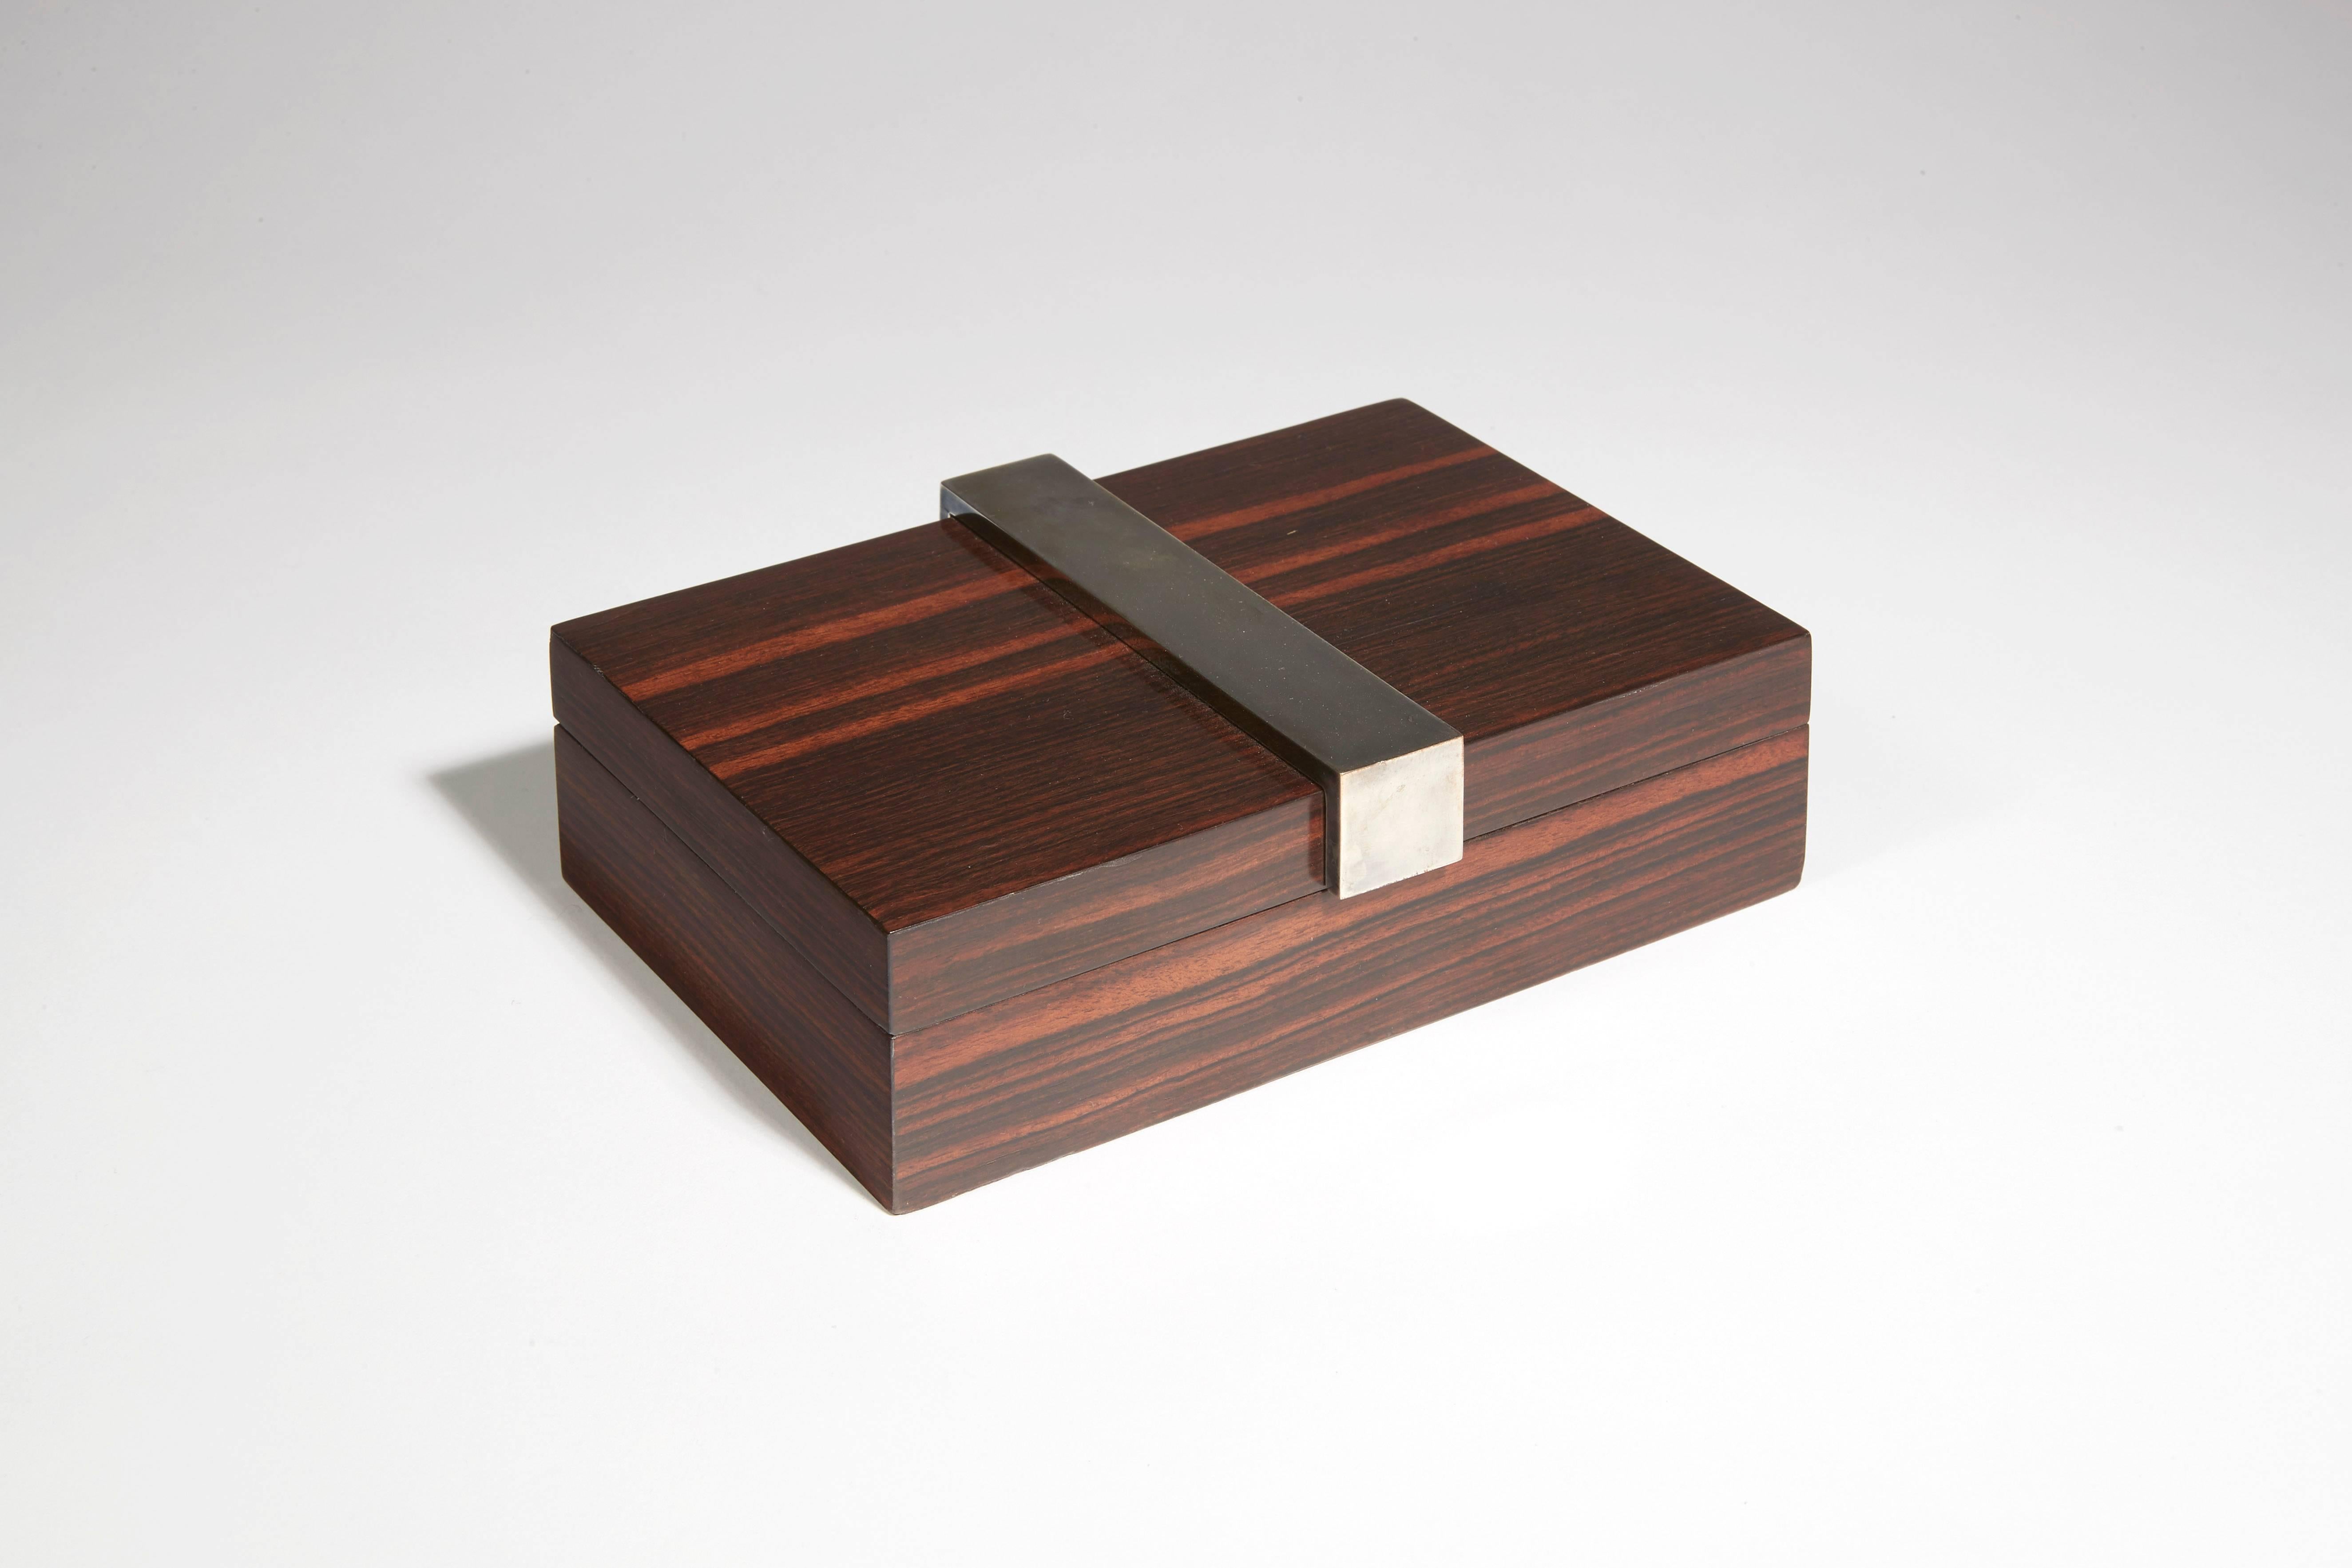 Box in wood veneer and silver nickel-plated metal. Stamped with 